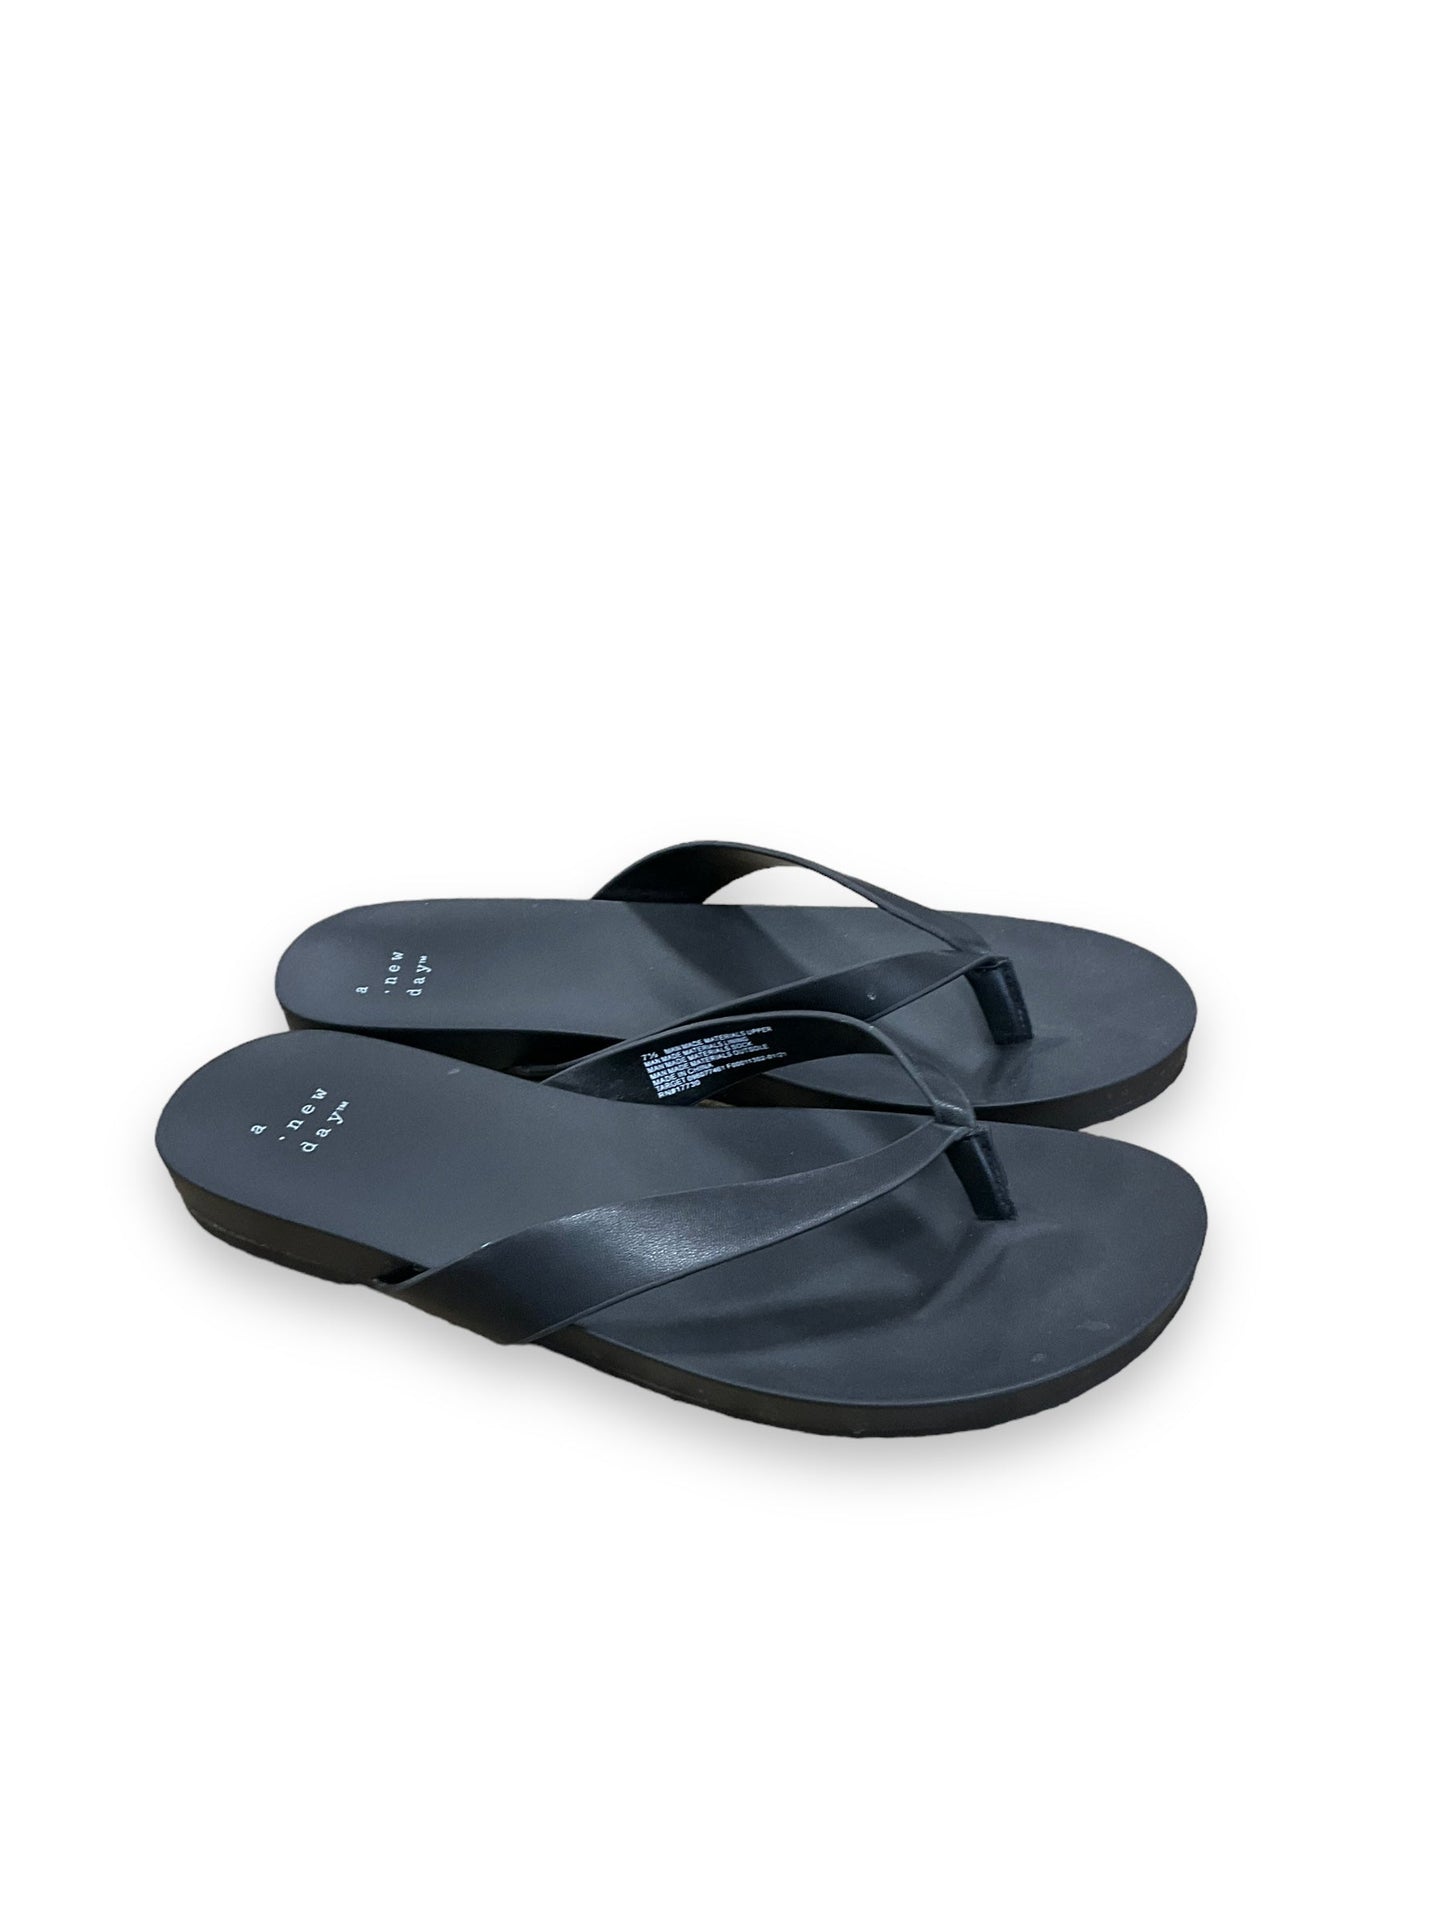 Black Sandals Flip Flops A New Day, Size 7.5